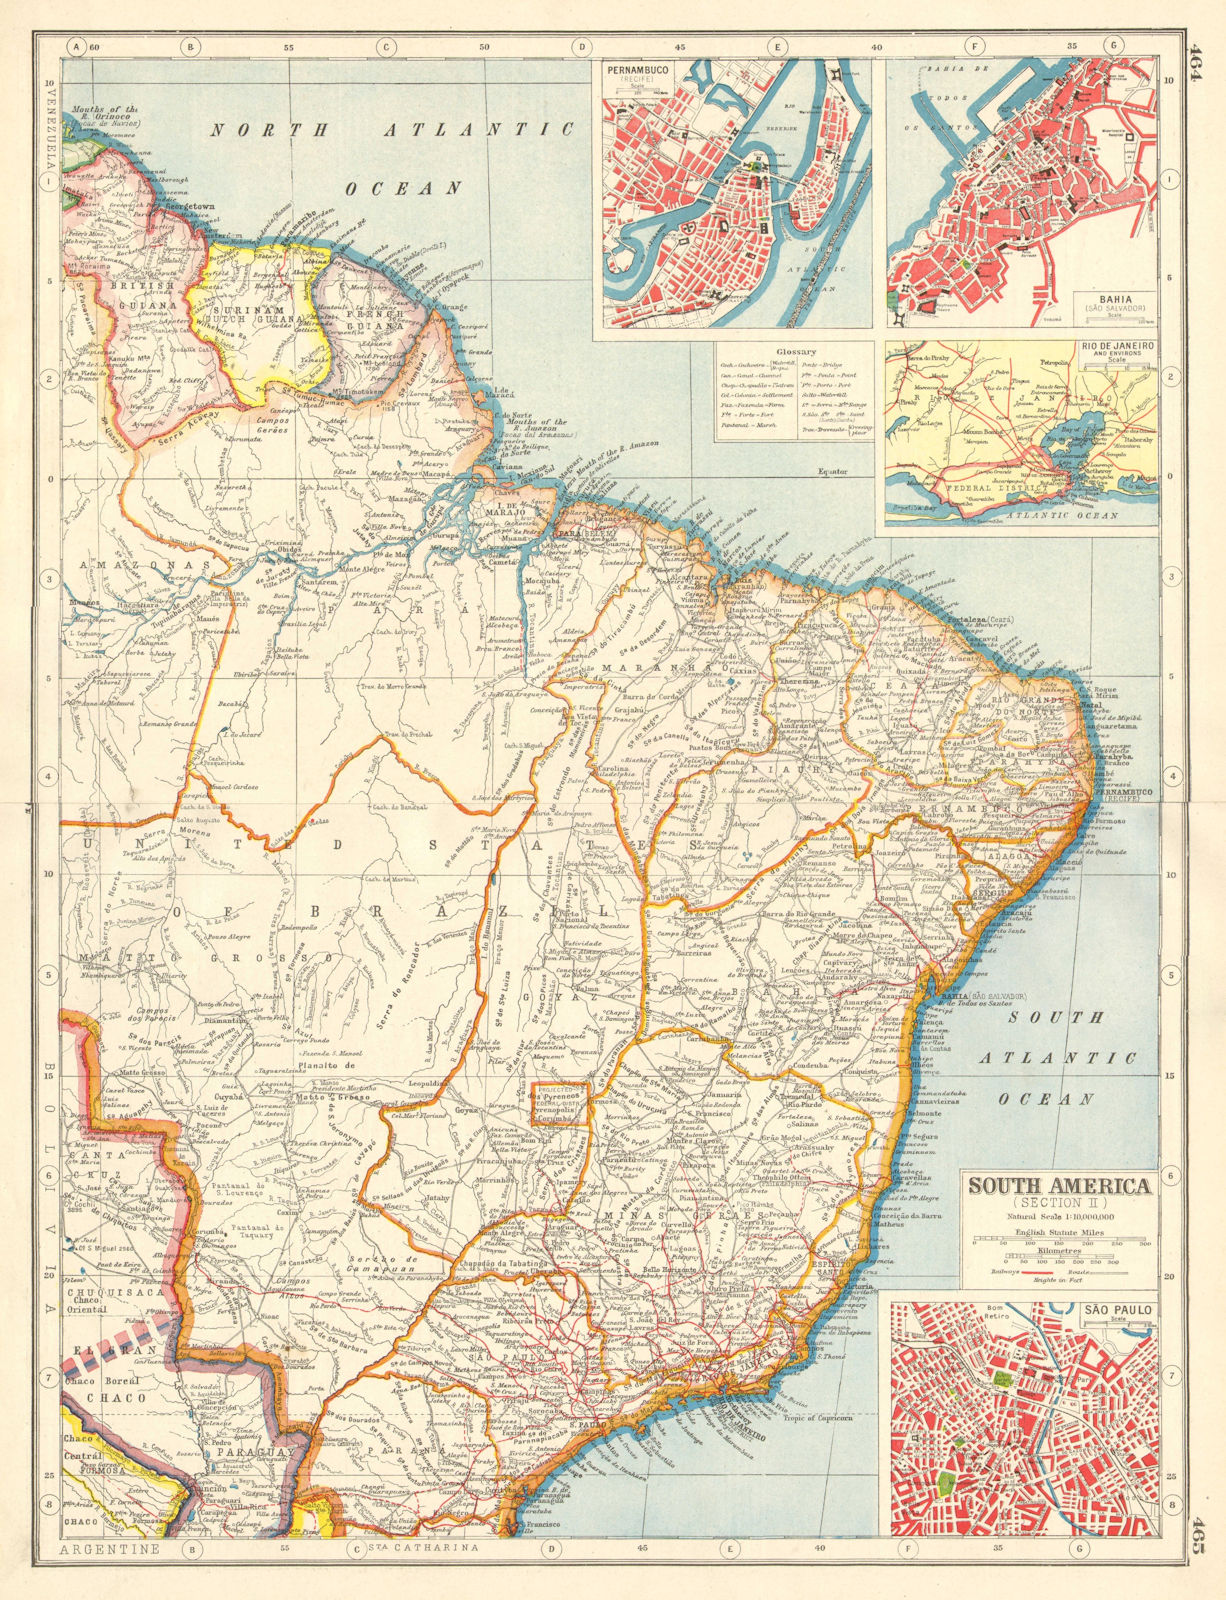 BRAZIL. "Projected Federal District" Pernambuco Bahia Rio Sao Paulo 1920 map